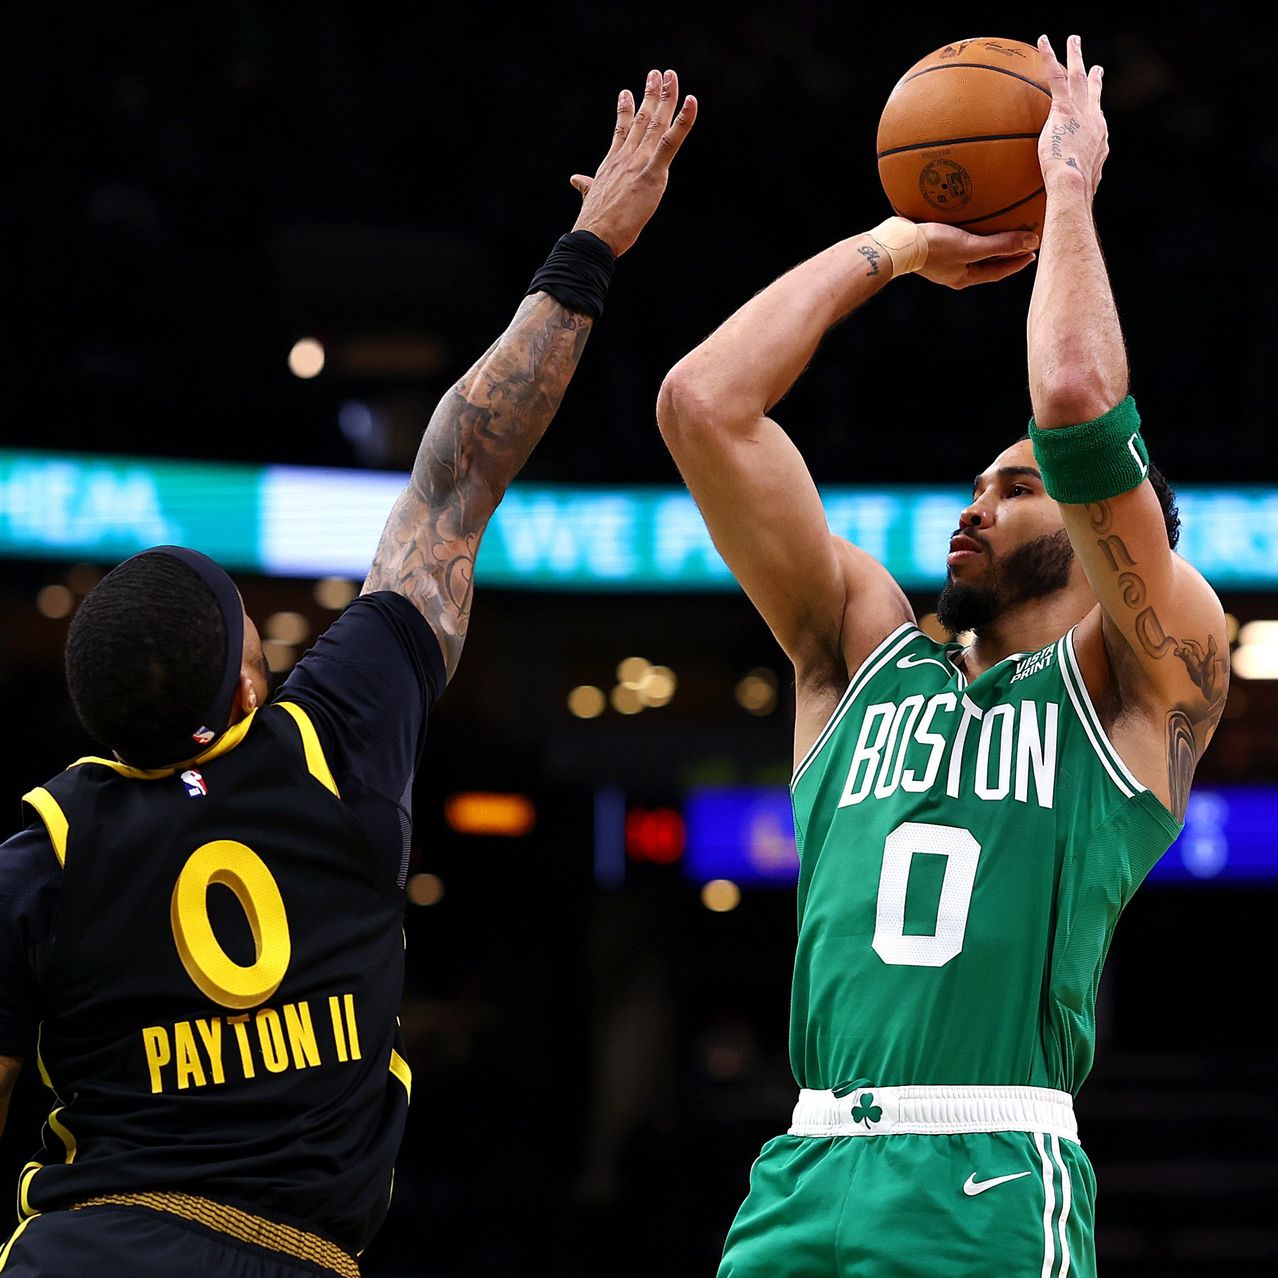 O'Neal Ragu Boston Celtics Tampil Mudah Meski Tuan Rumah "playoff" NBA